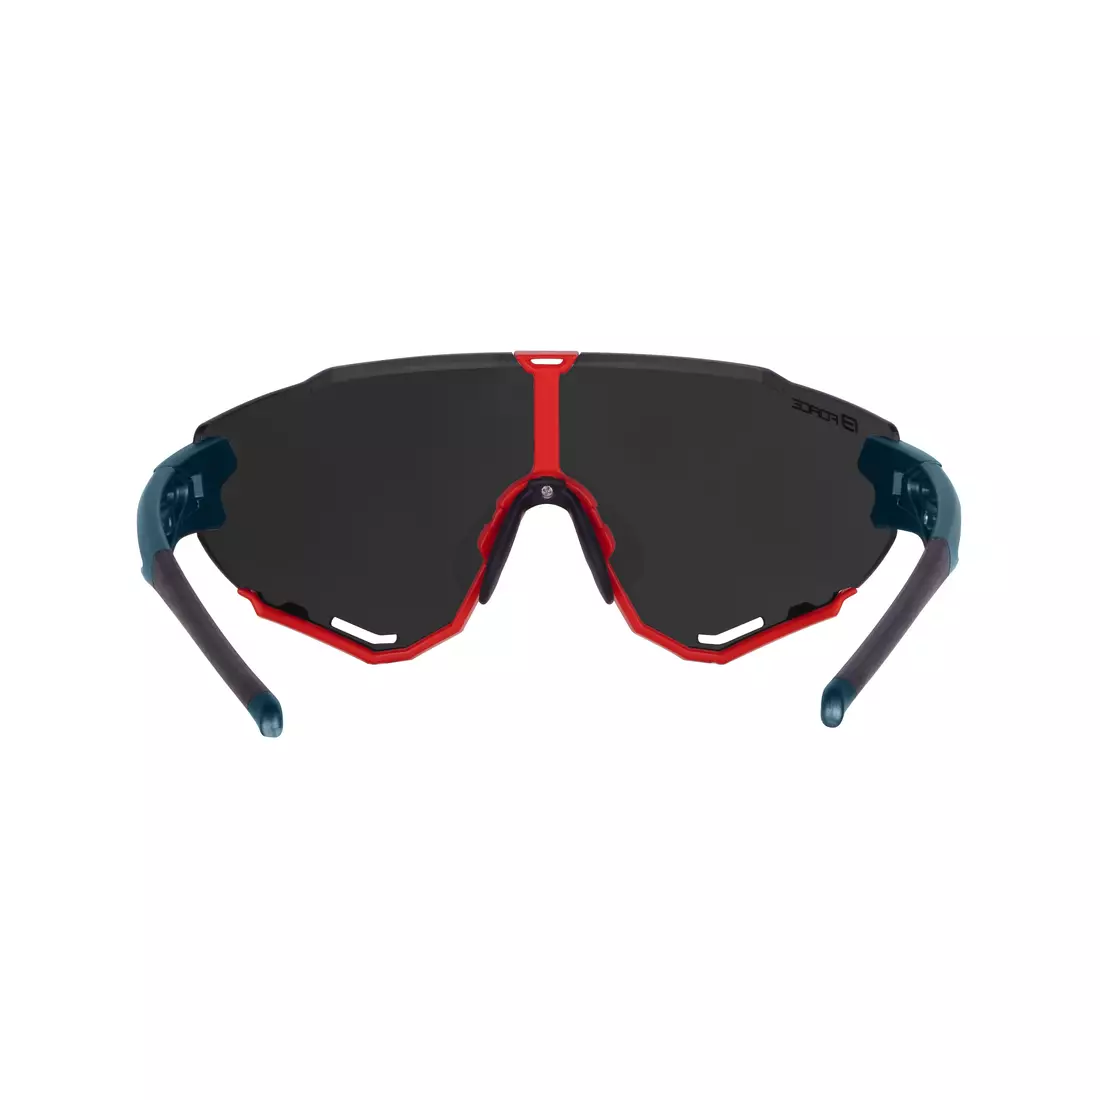 FORCE ochelari de ciclism / sport CREED rosu albastru, 91179